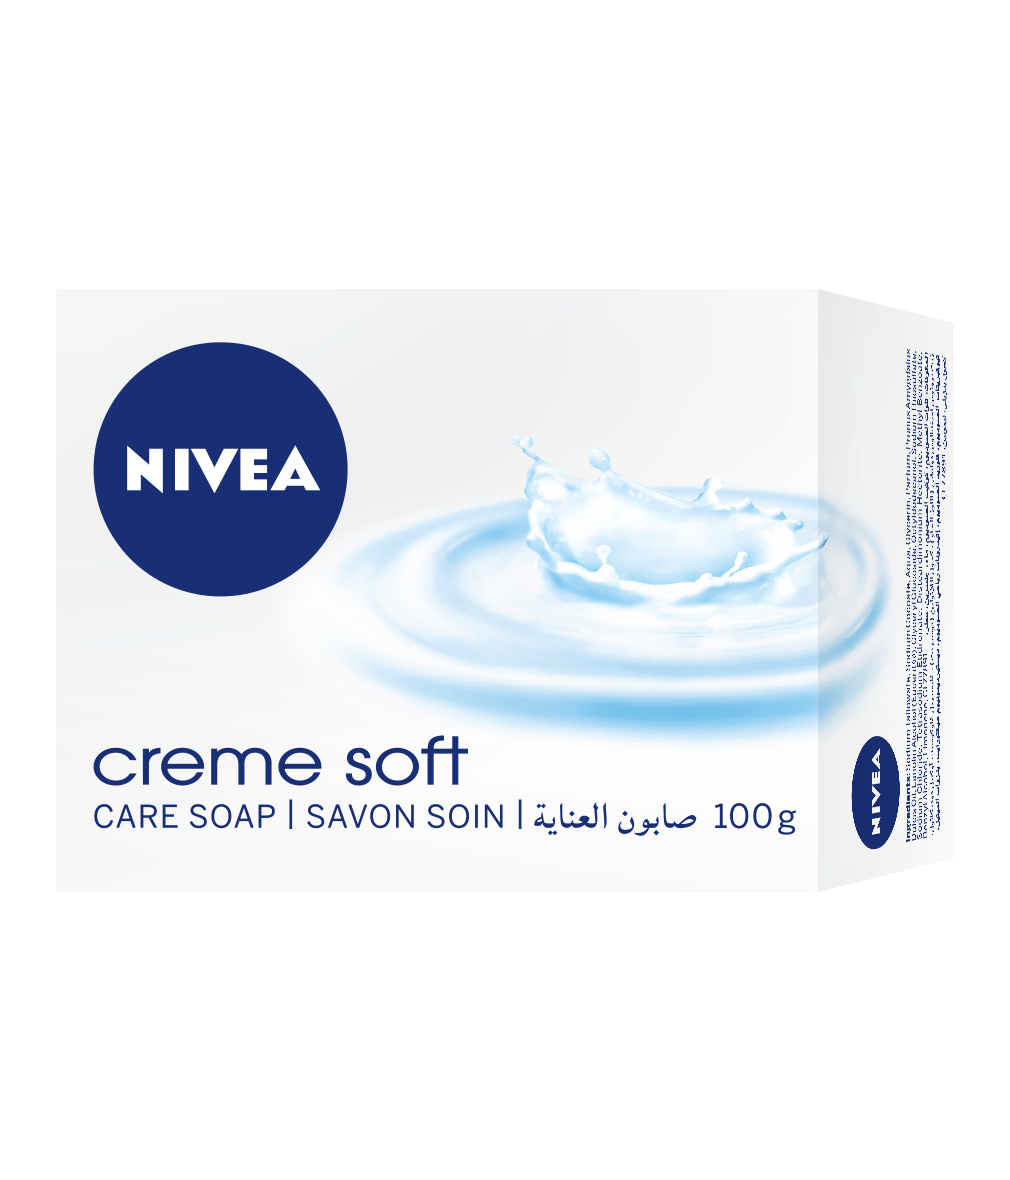 80608 NIVEA Creme Soft Bar Soap 100g clean packshot bi-lingual